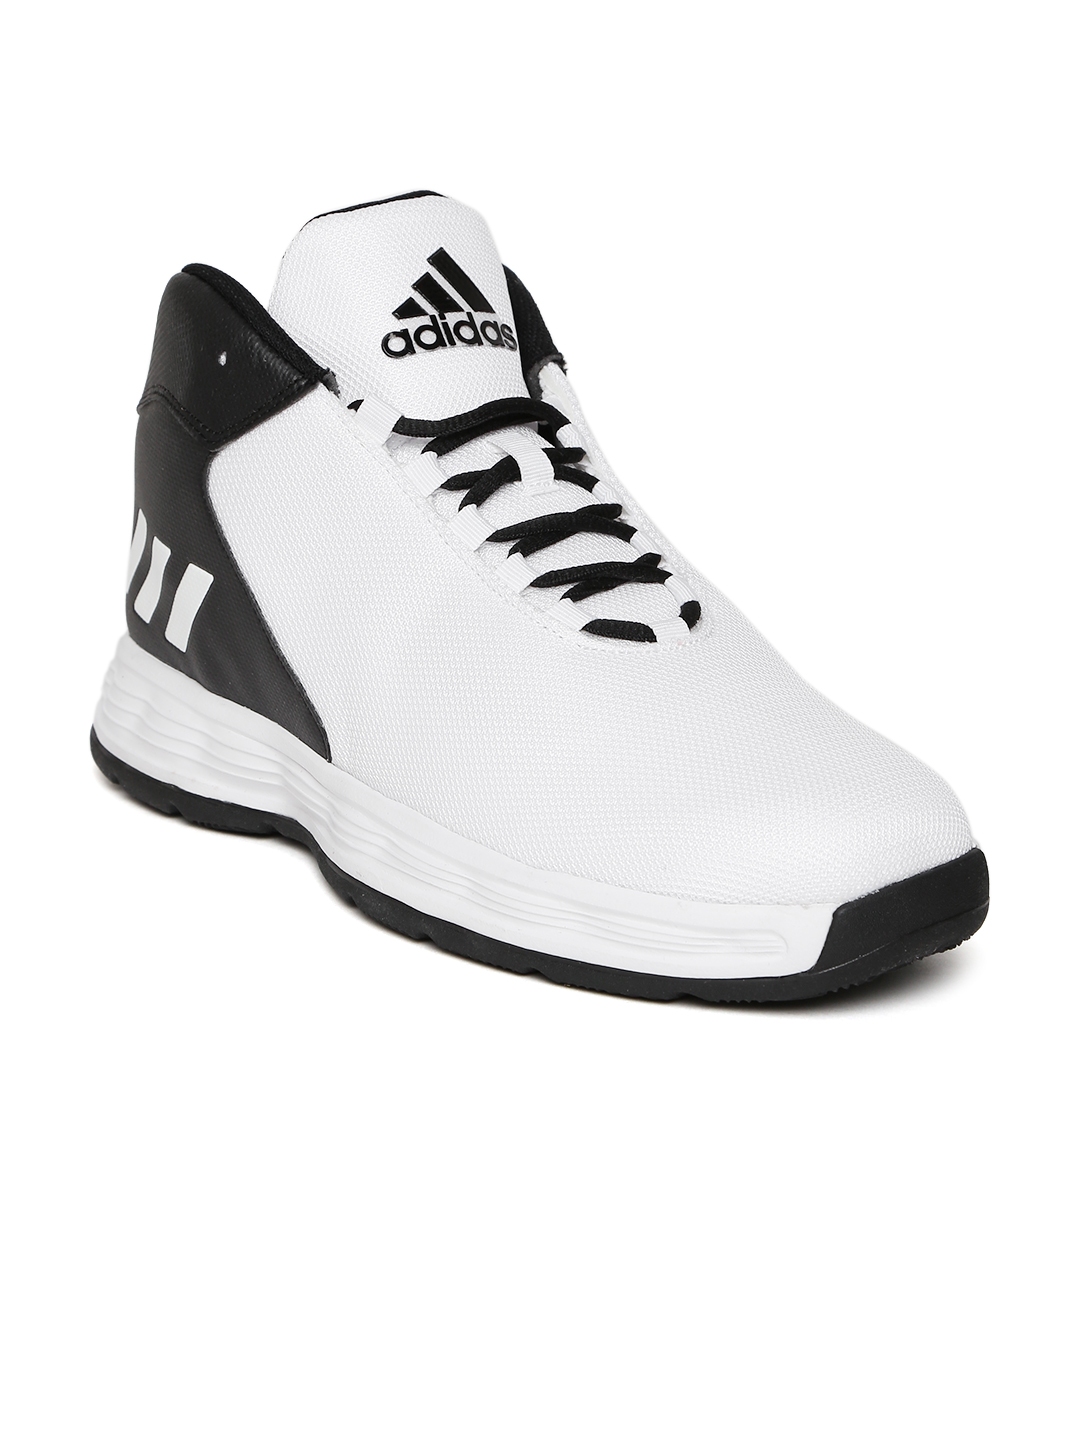 Buy ADIDAS Men White & Black HOOPSTA Colourblocked Basketball Shoes ...